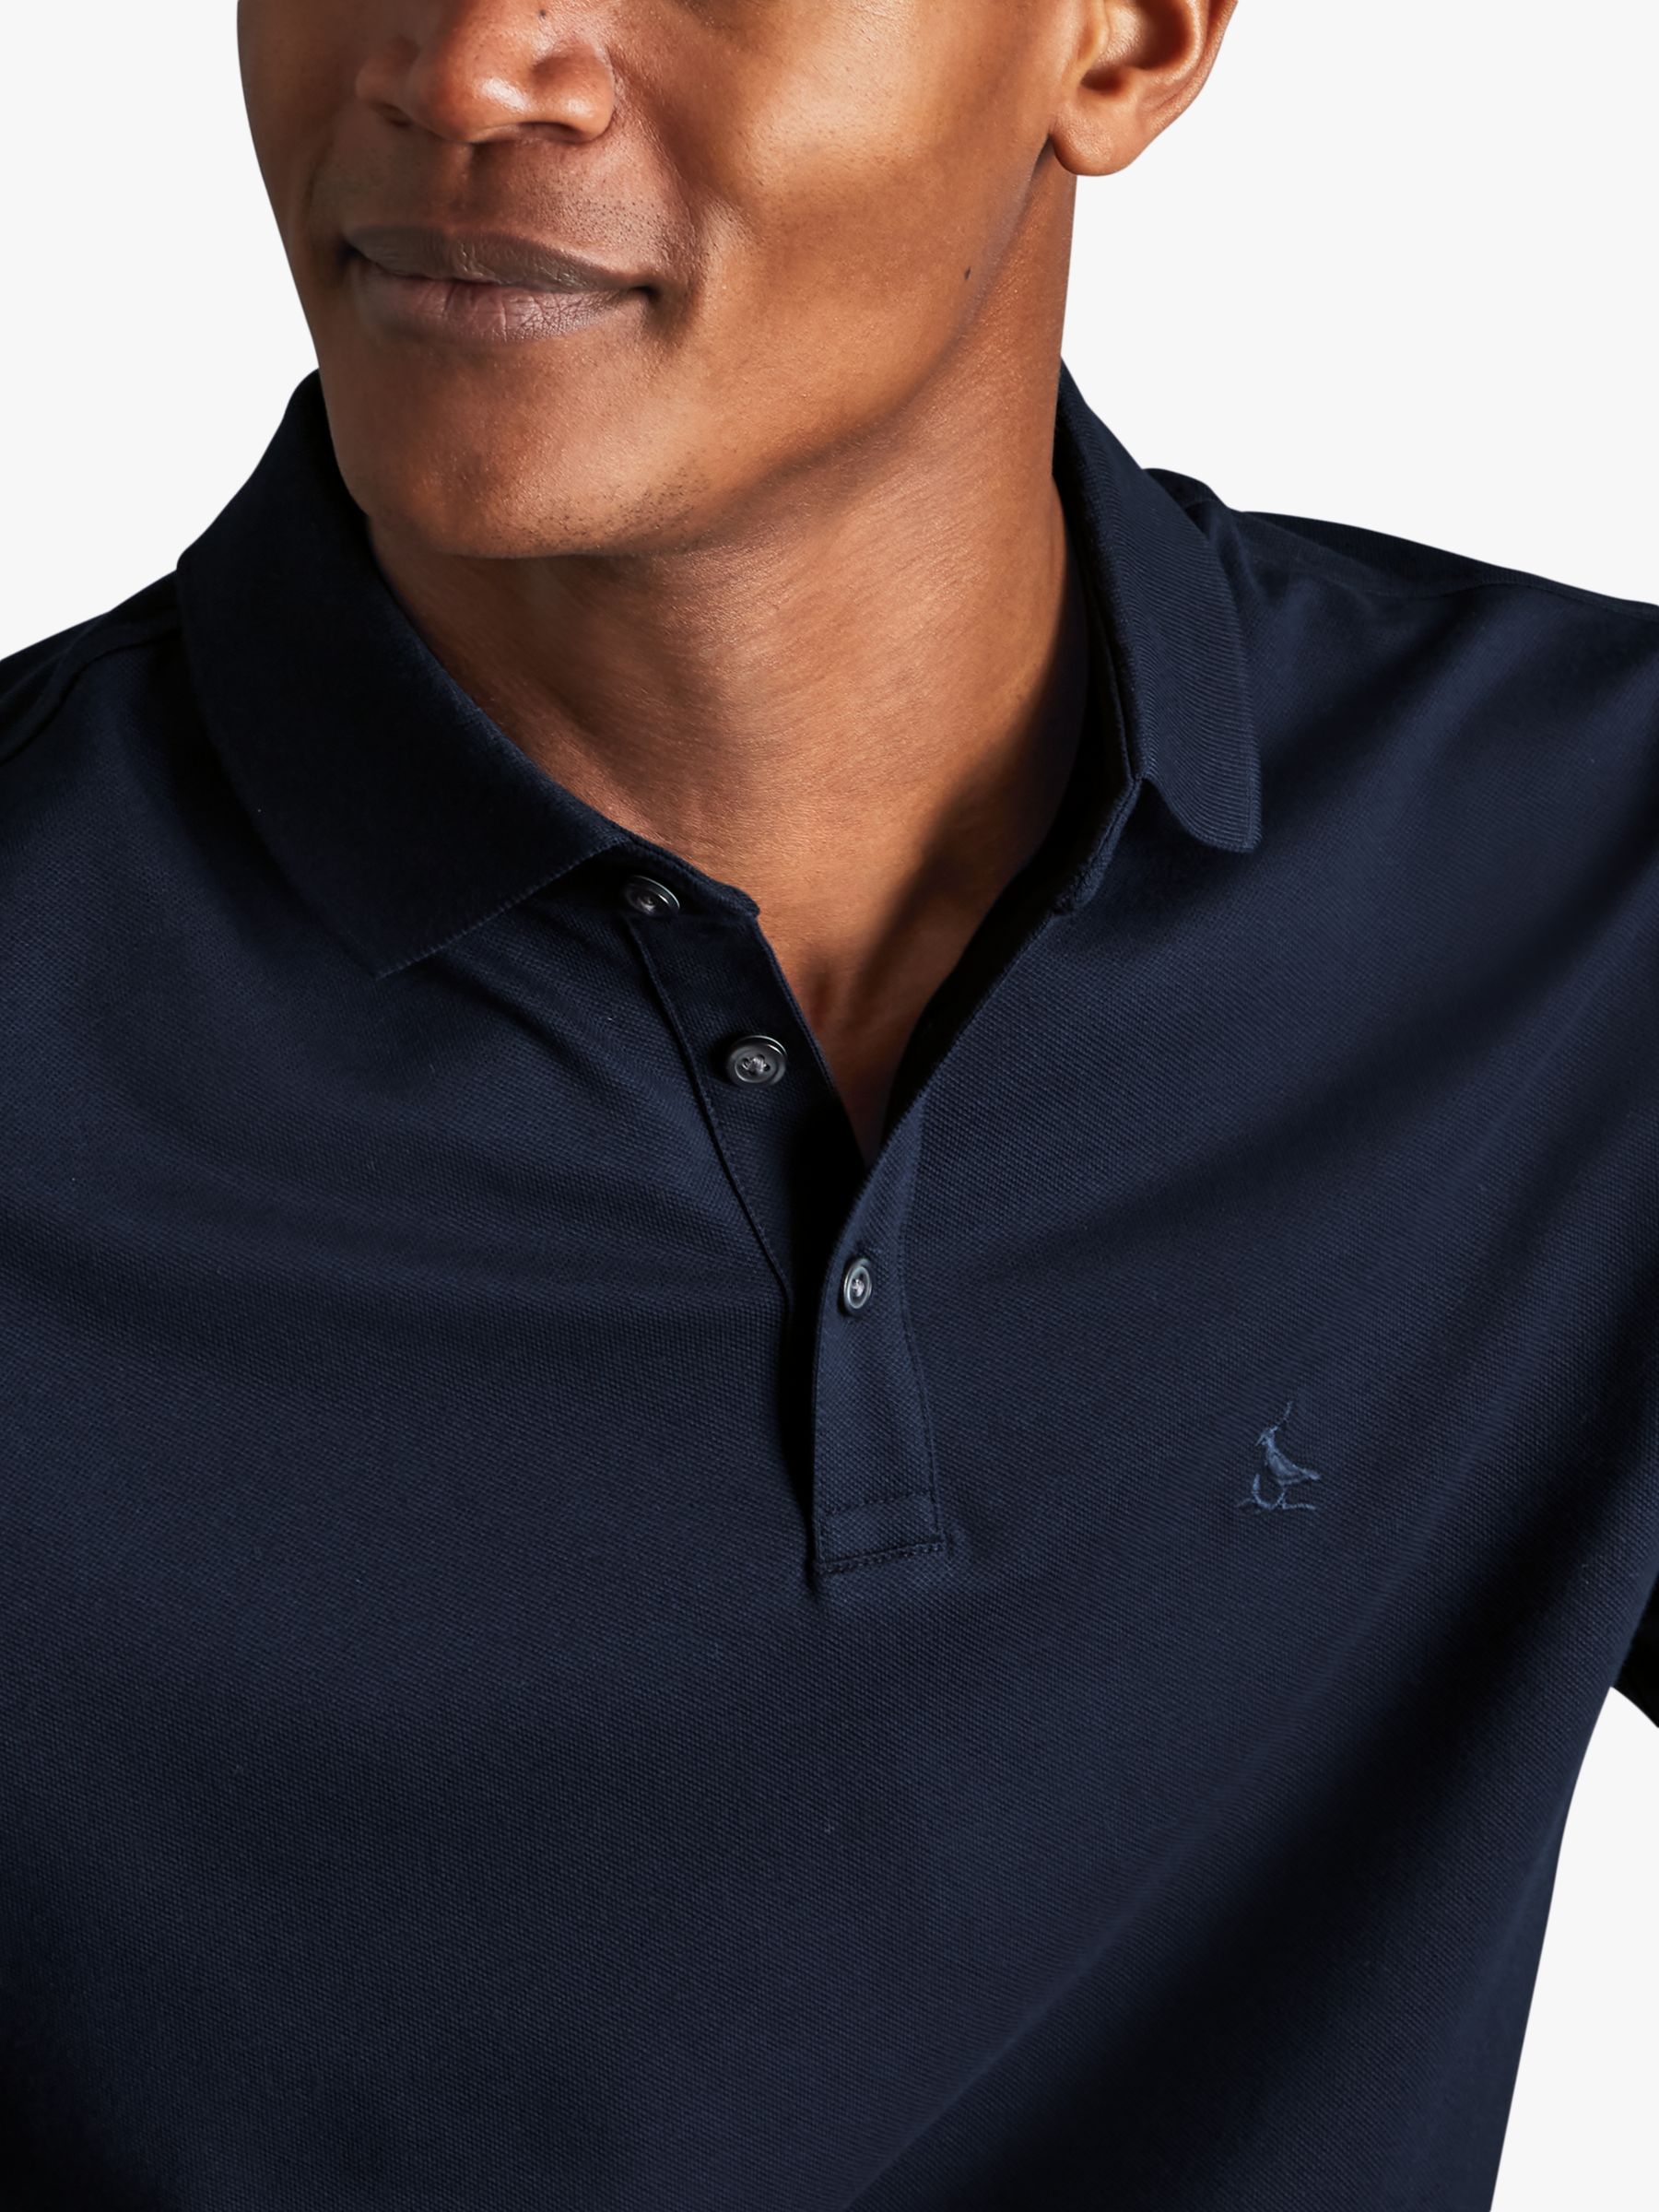 Buy Charles Tyrwhitt Long Sleeve Pique Polo Shirt Online at johnlewis.com